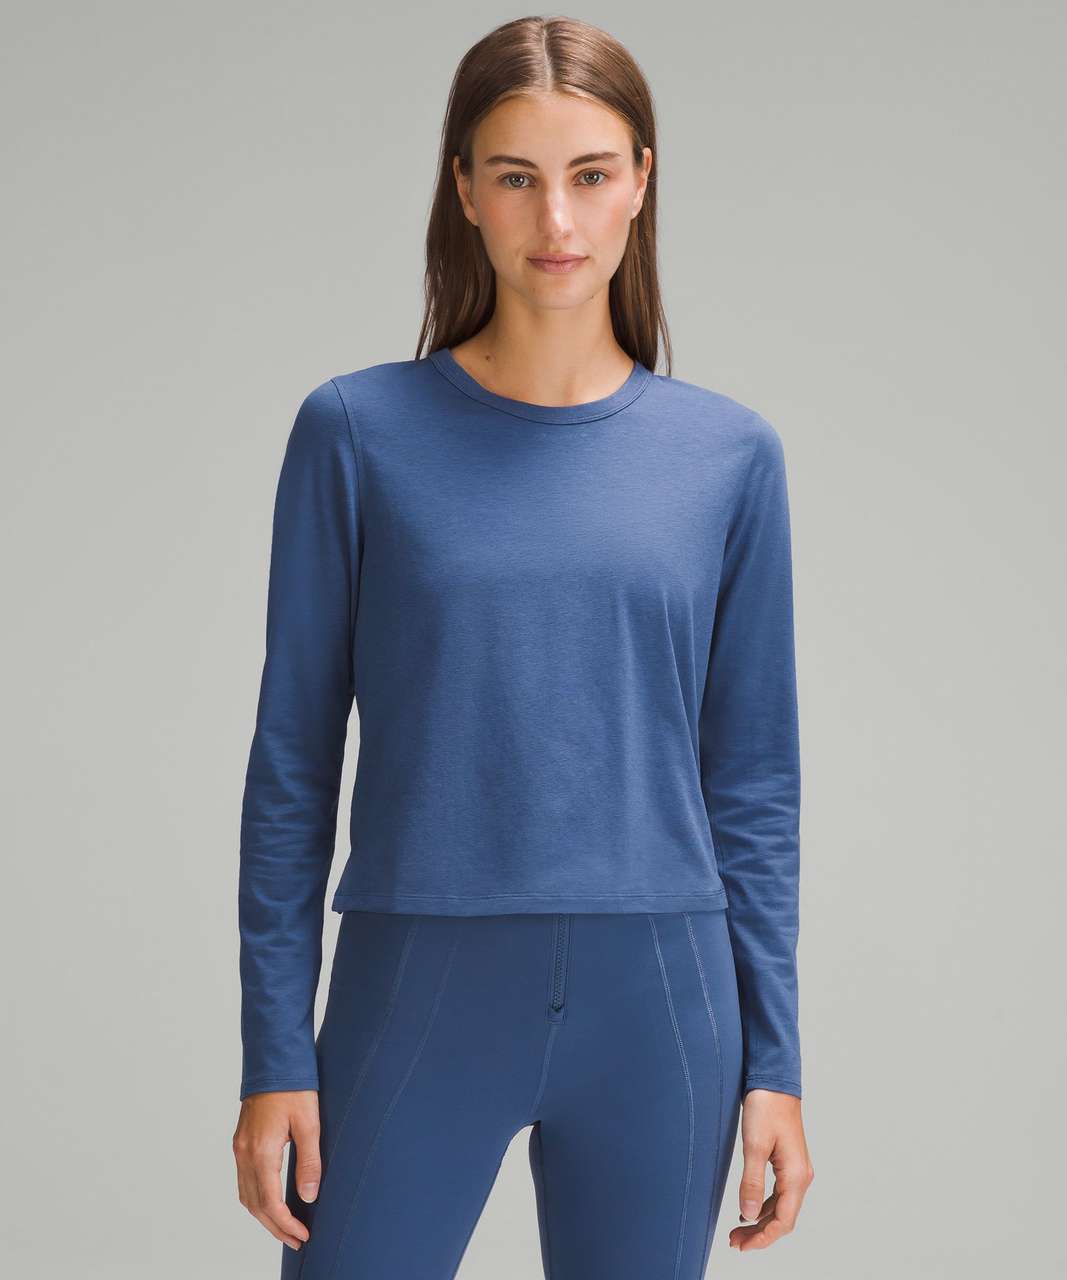 Lululemon Classic-Fit Cotton-Blend Long-Sleeve Shirt - Pitch Blue ...